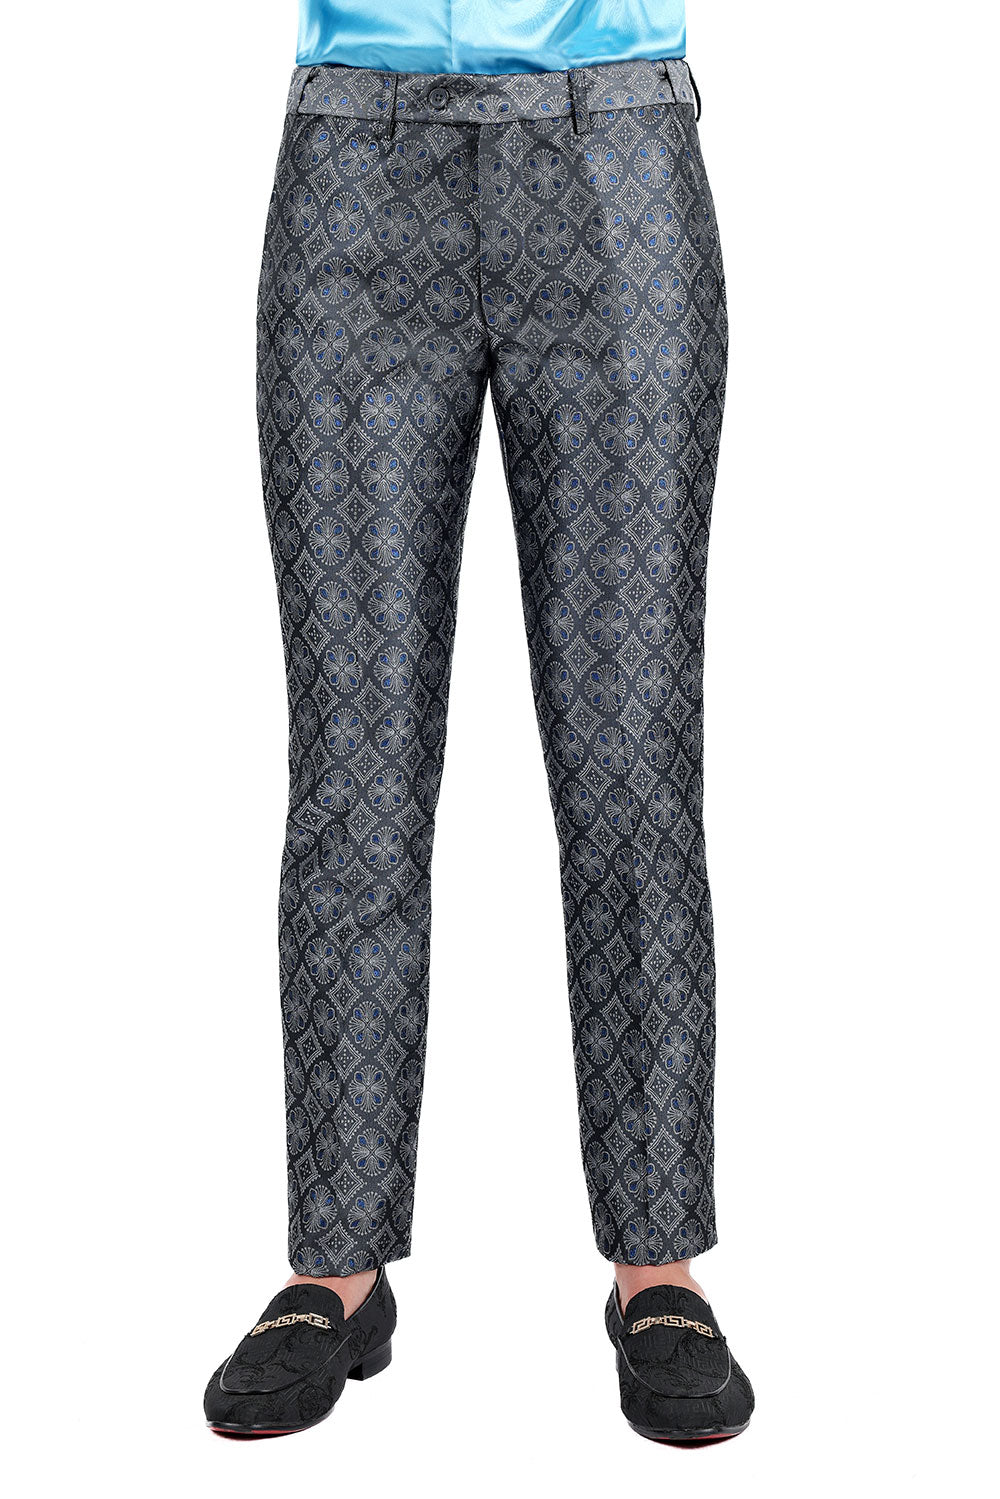 BARABAS Men's Decorative Geometric Printed Chino Pants 3CP05 Gray